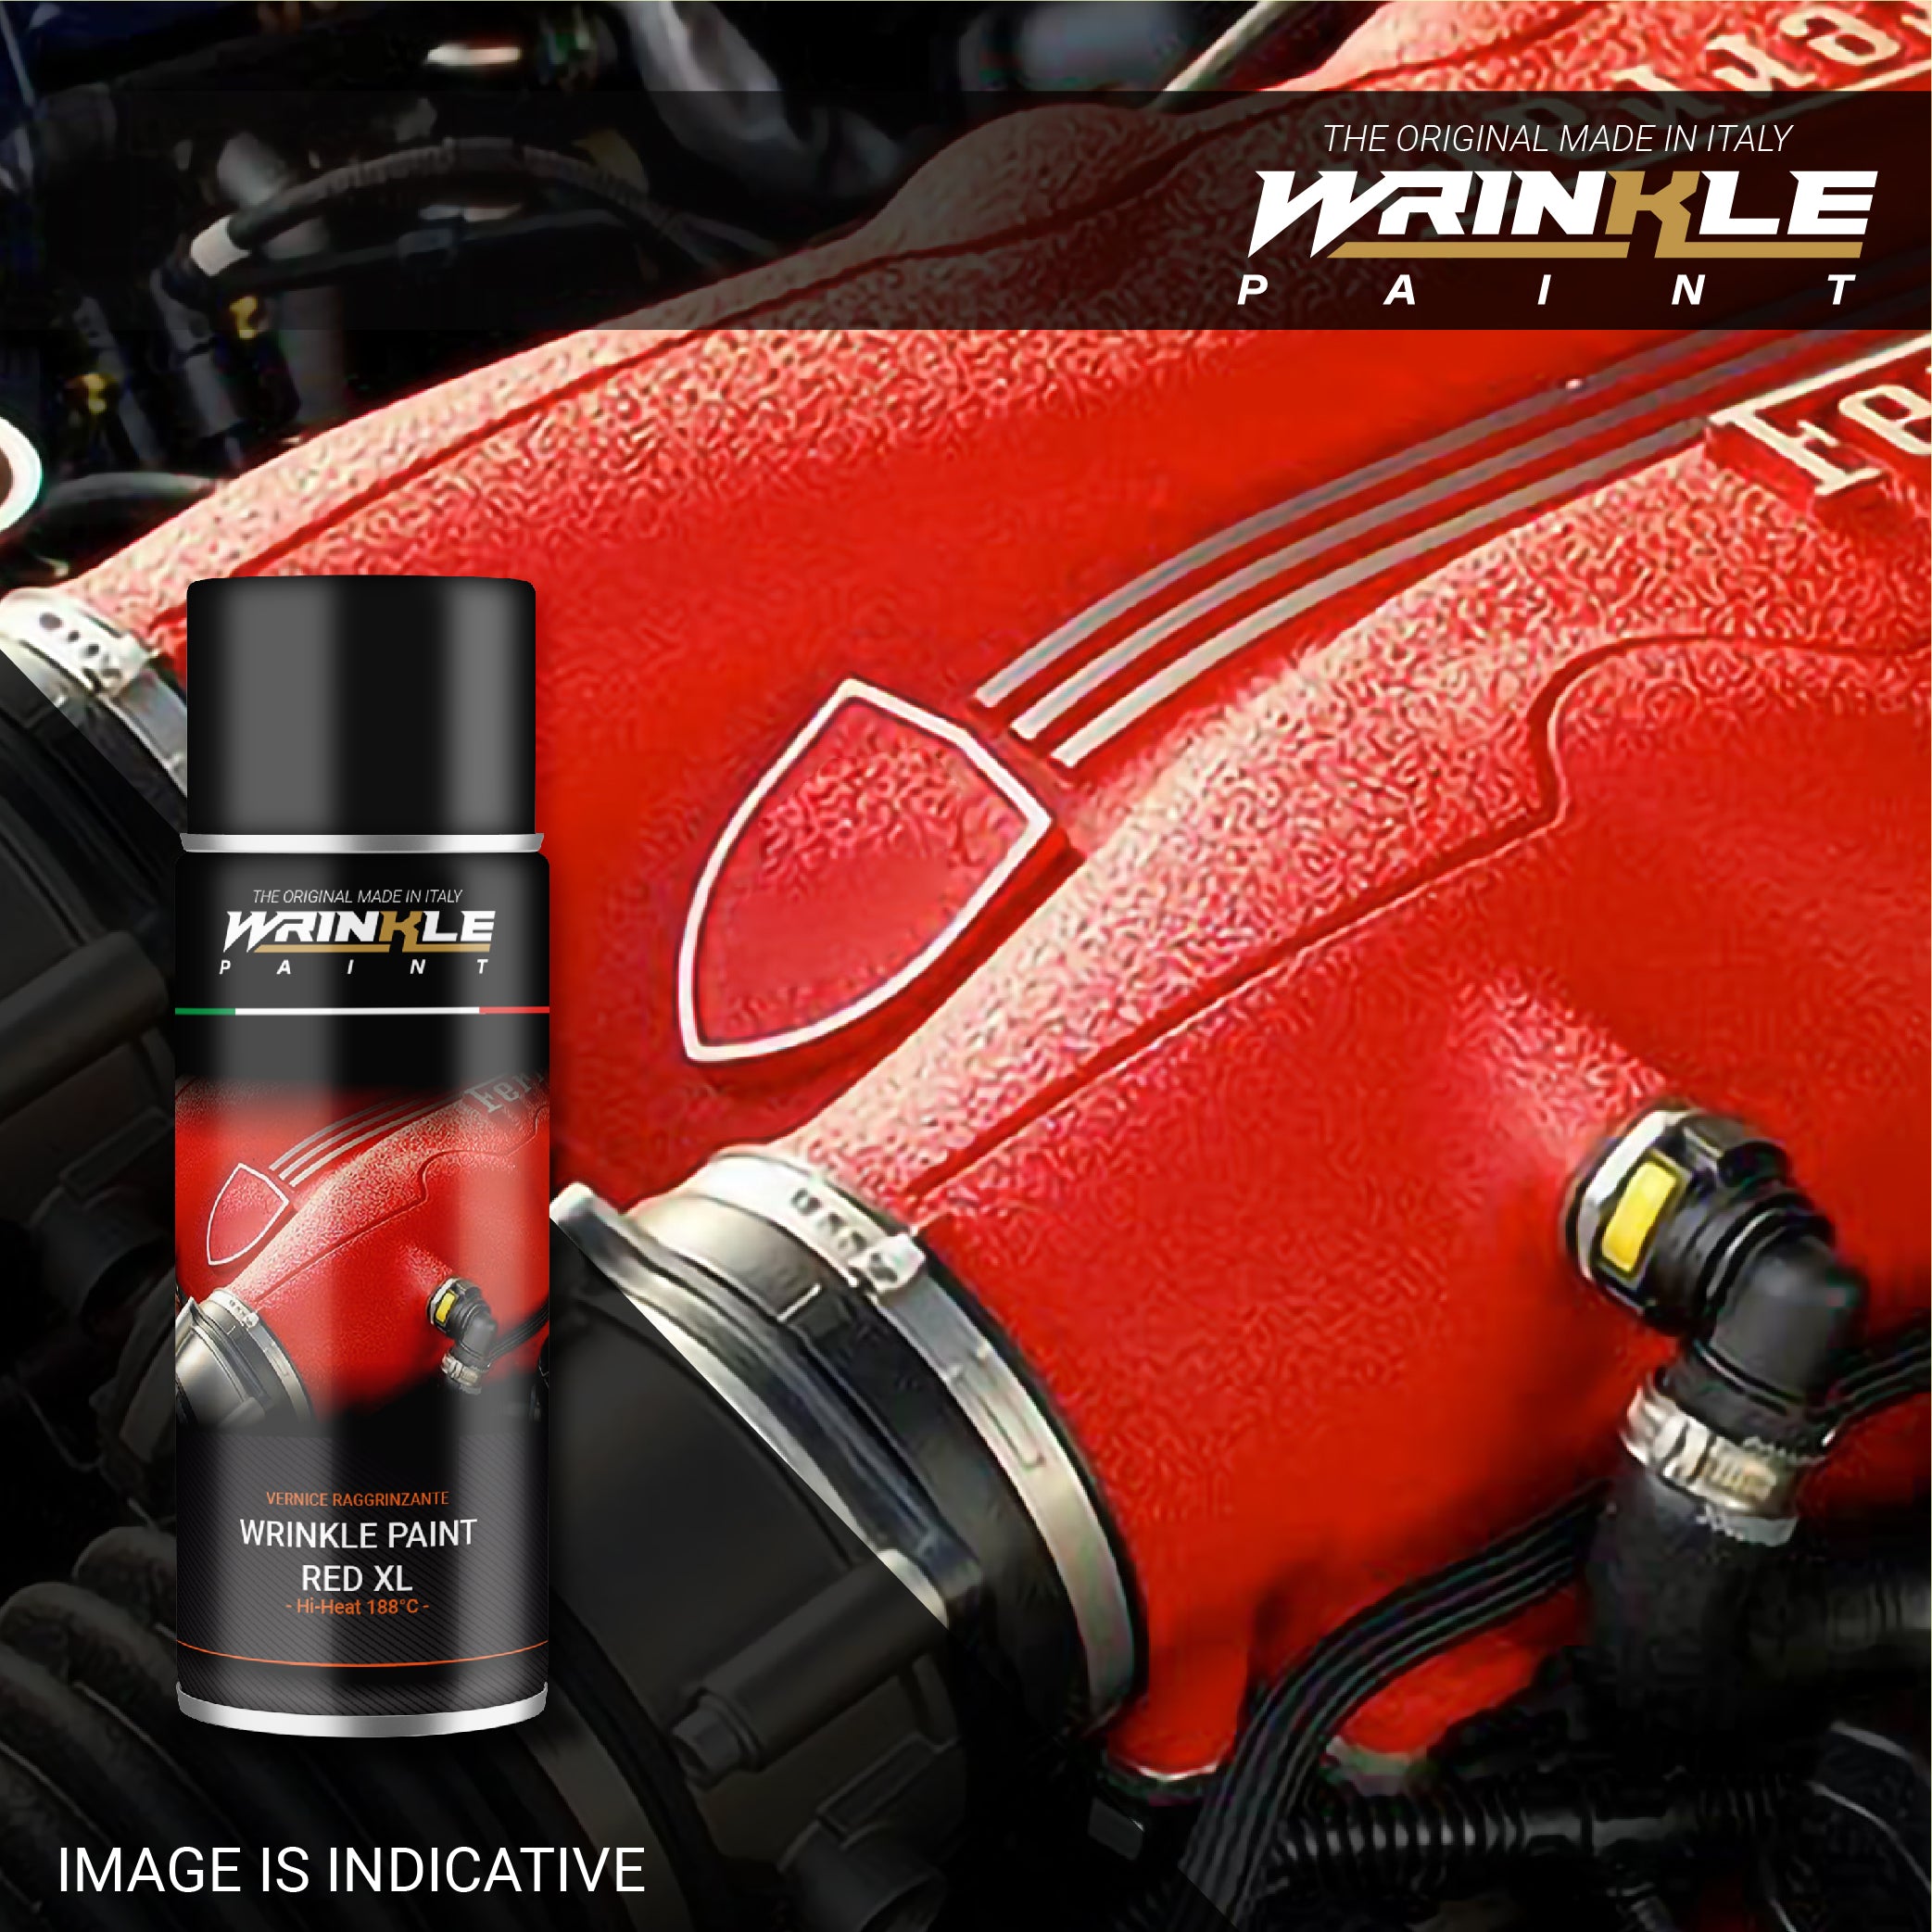 Wrinkle Paint Spray RED FERRARI XL Engine High Heat - 400 ml